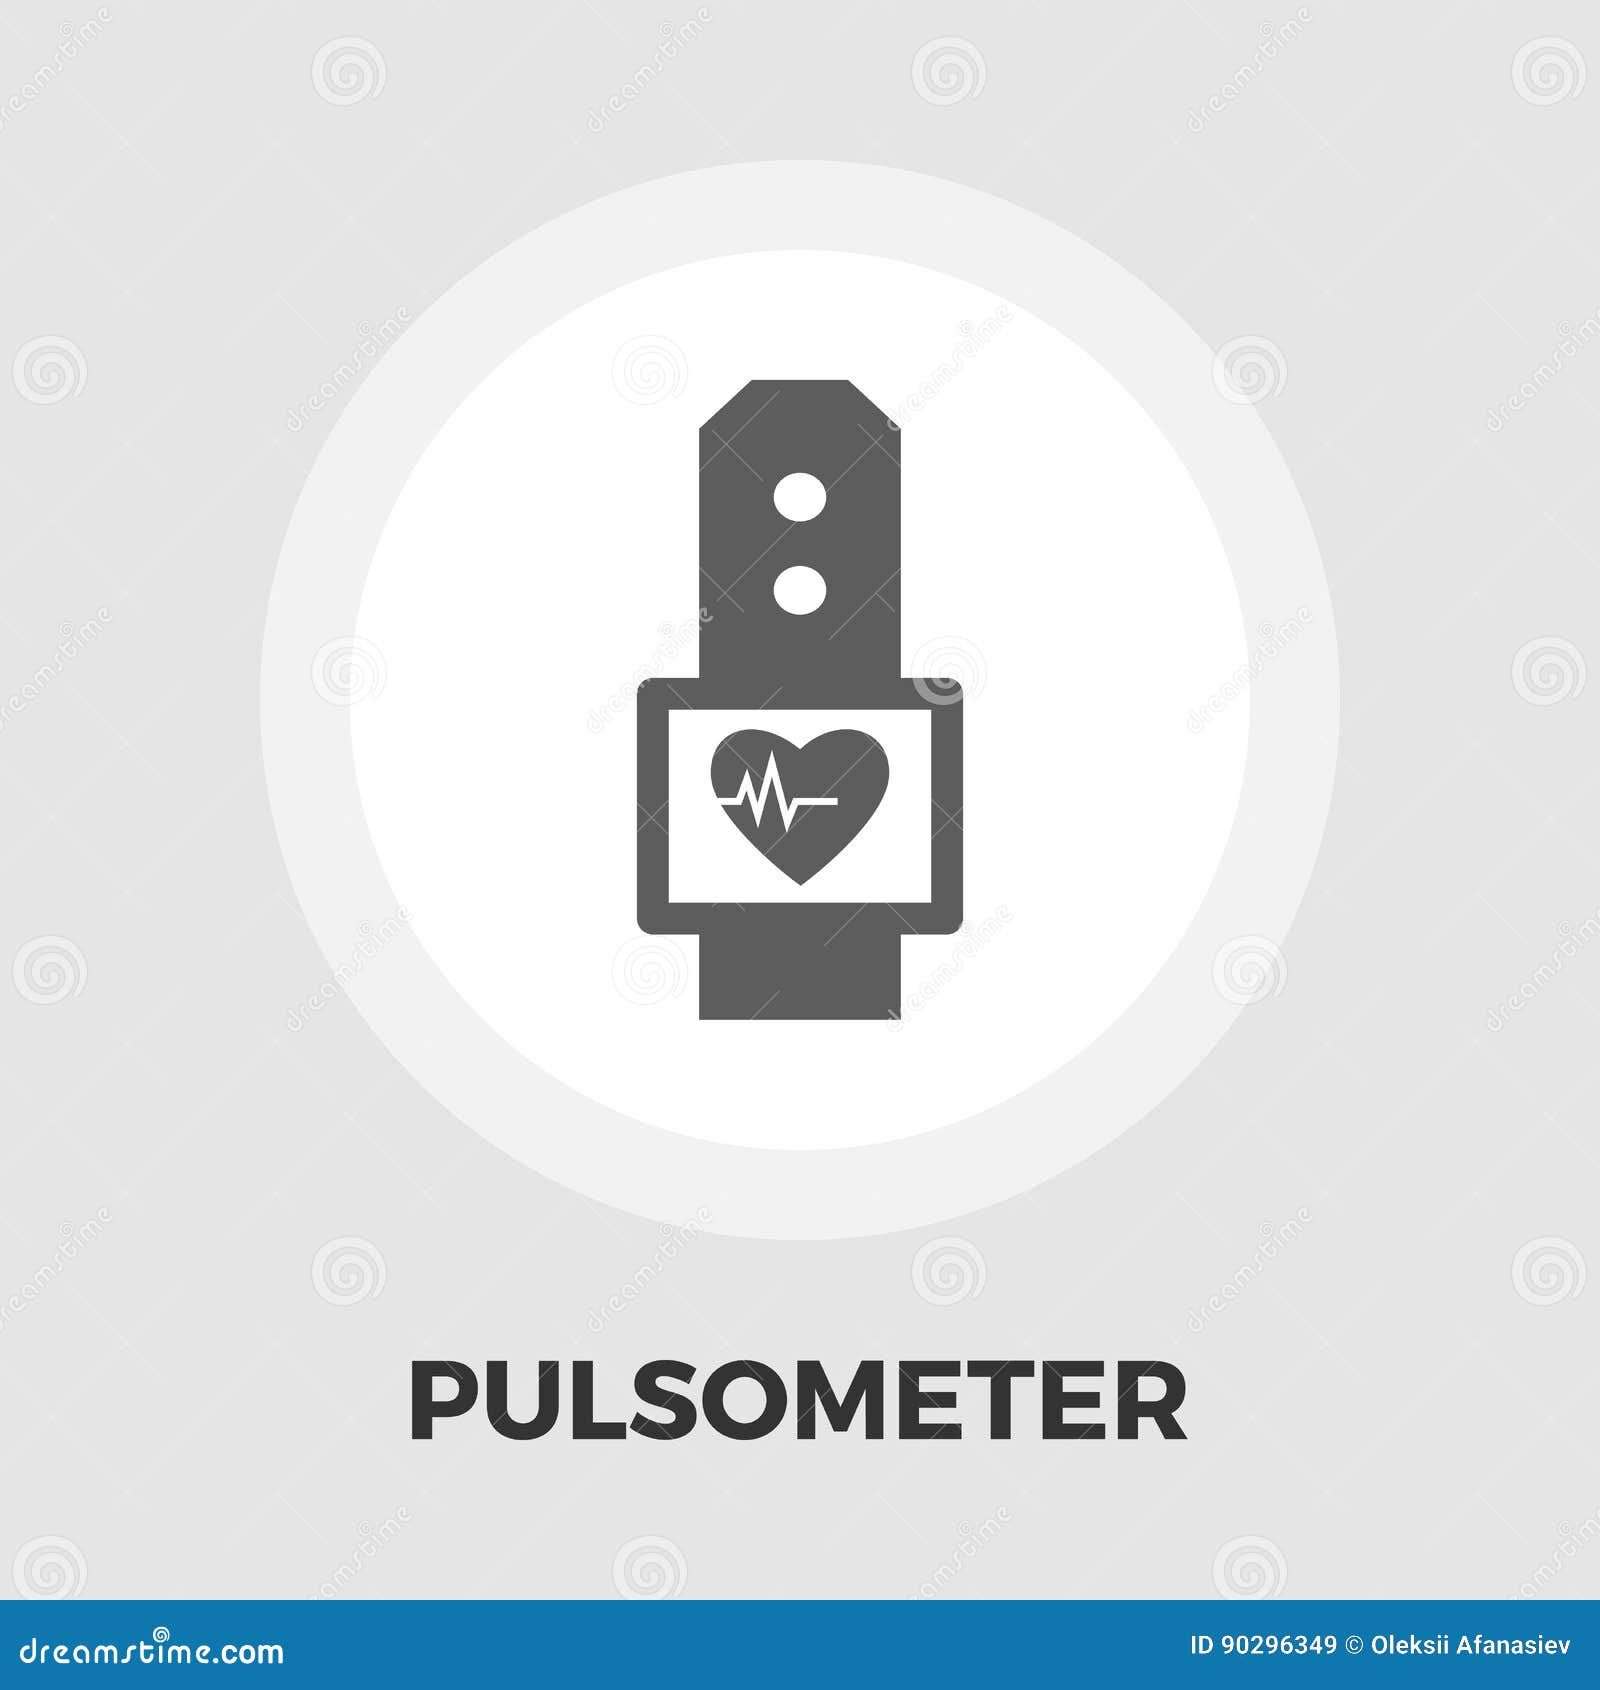 pulsometer icon flat